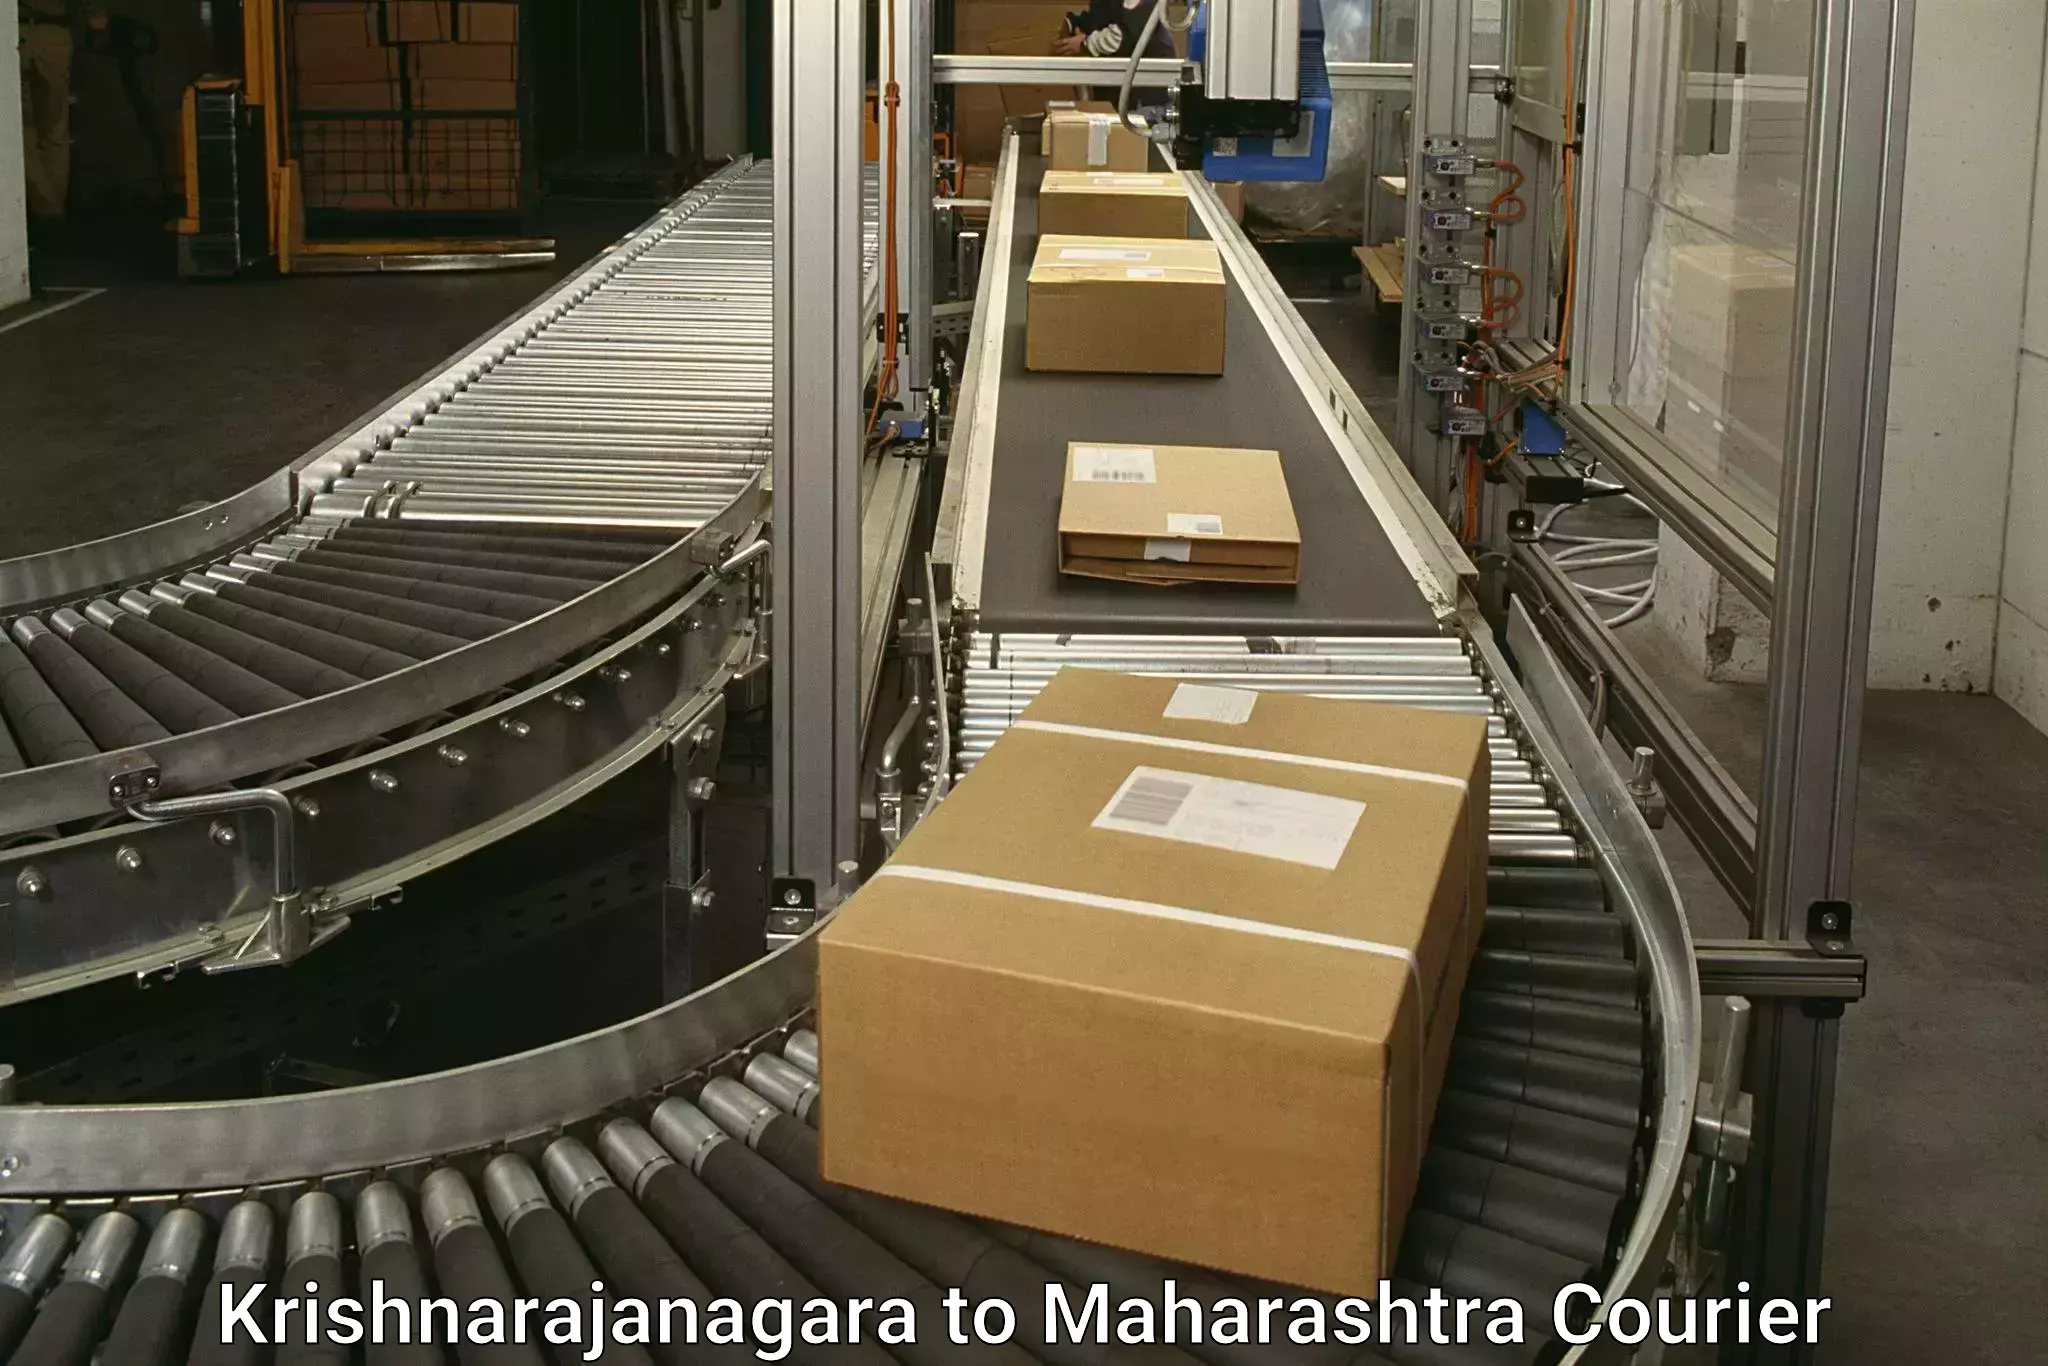 Courier services in Krishnarajanagara to Mumbai Port